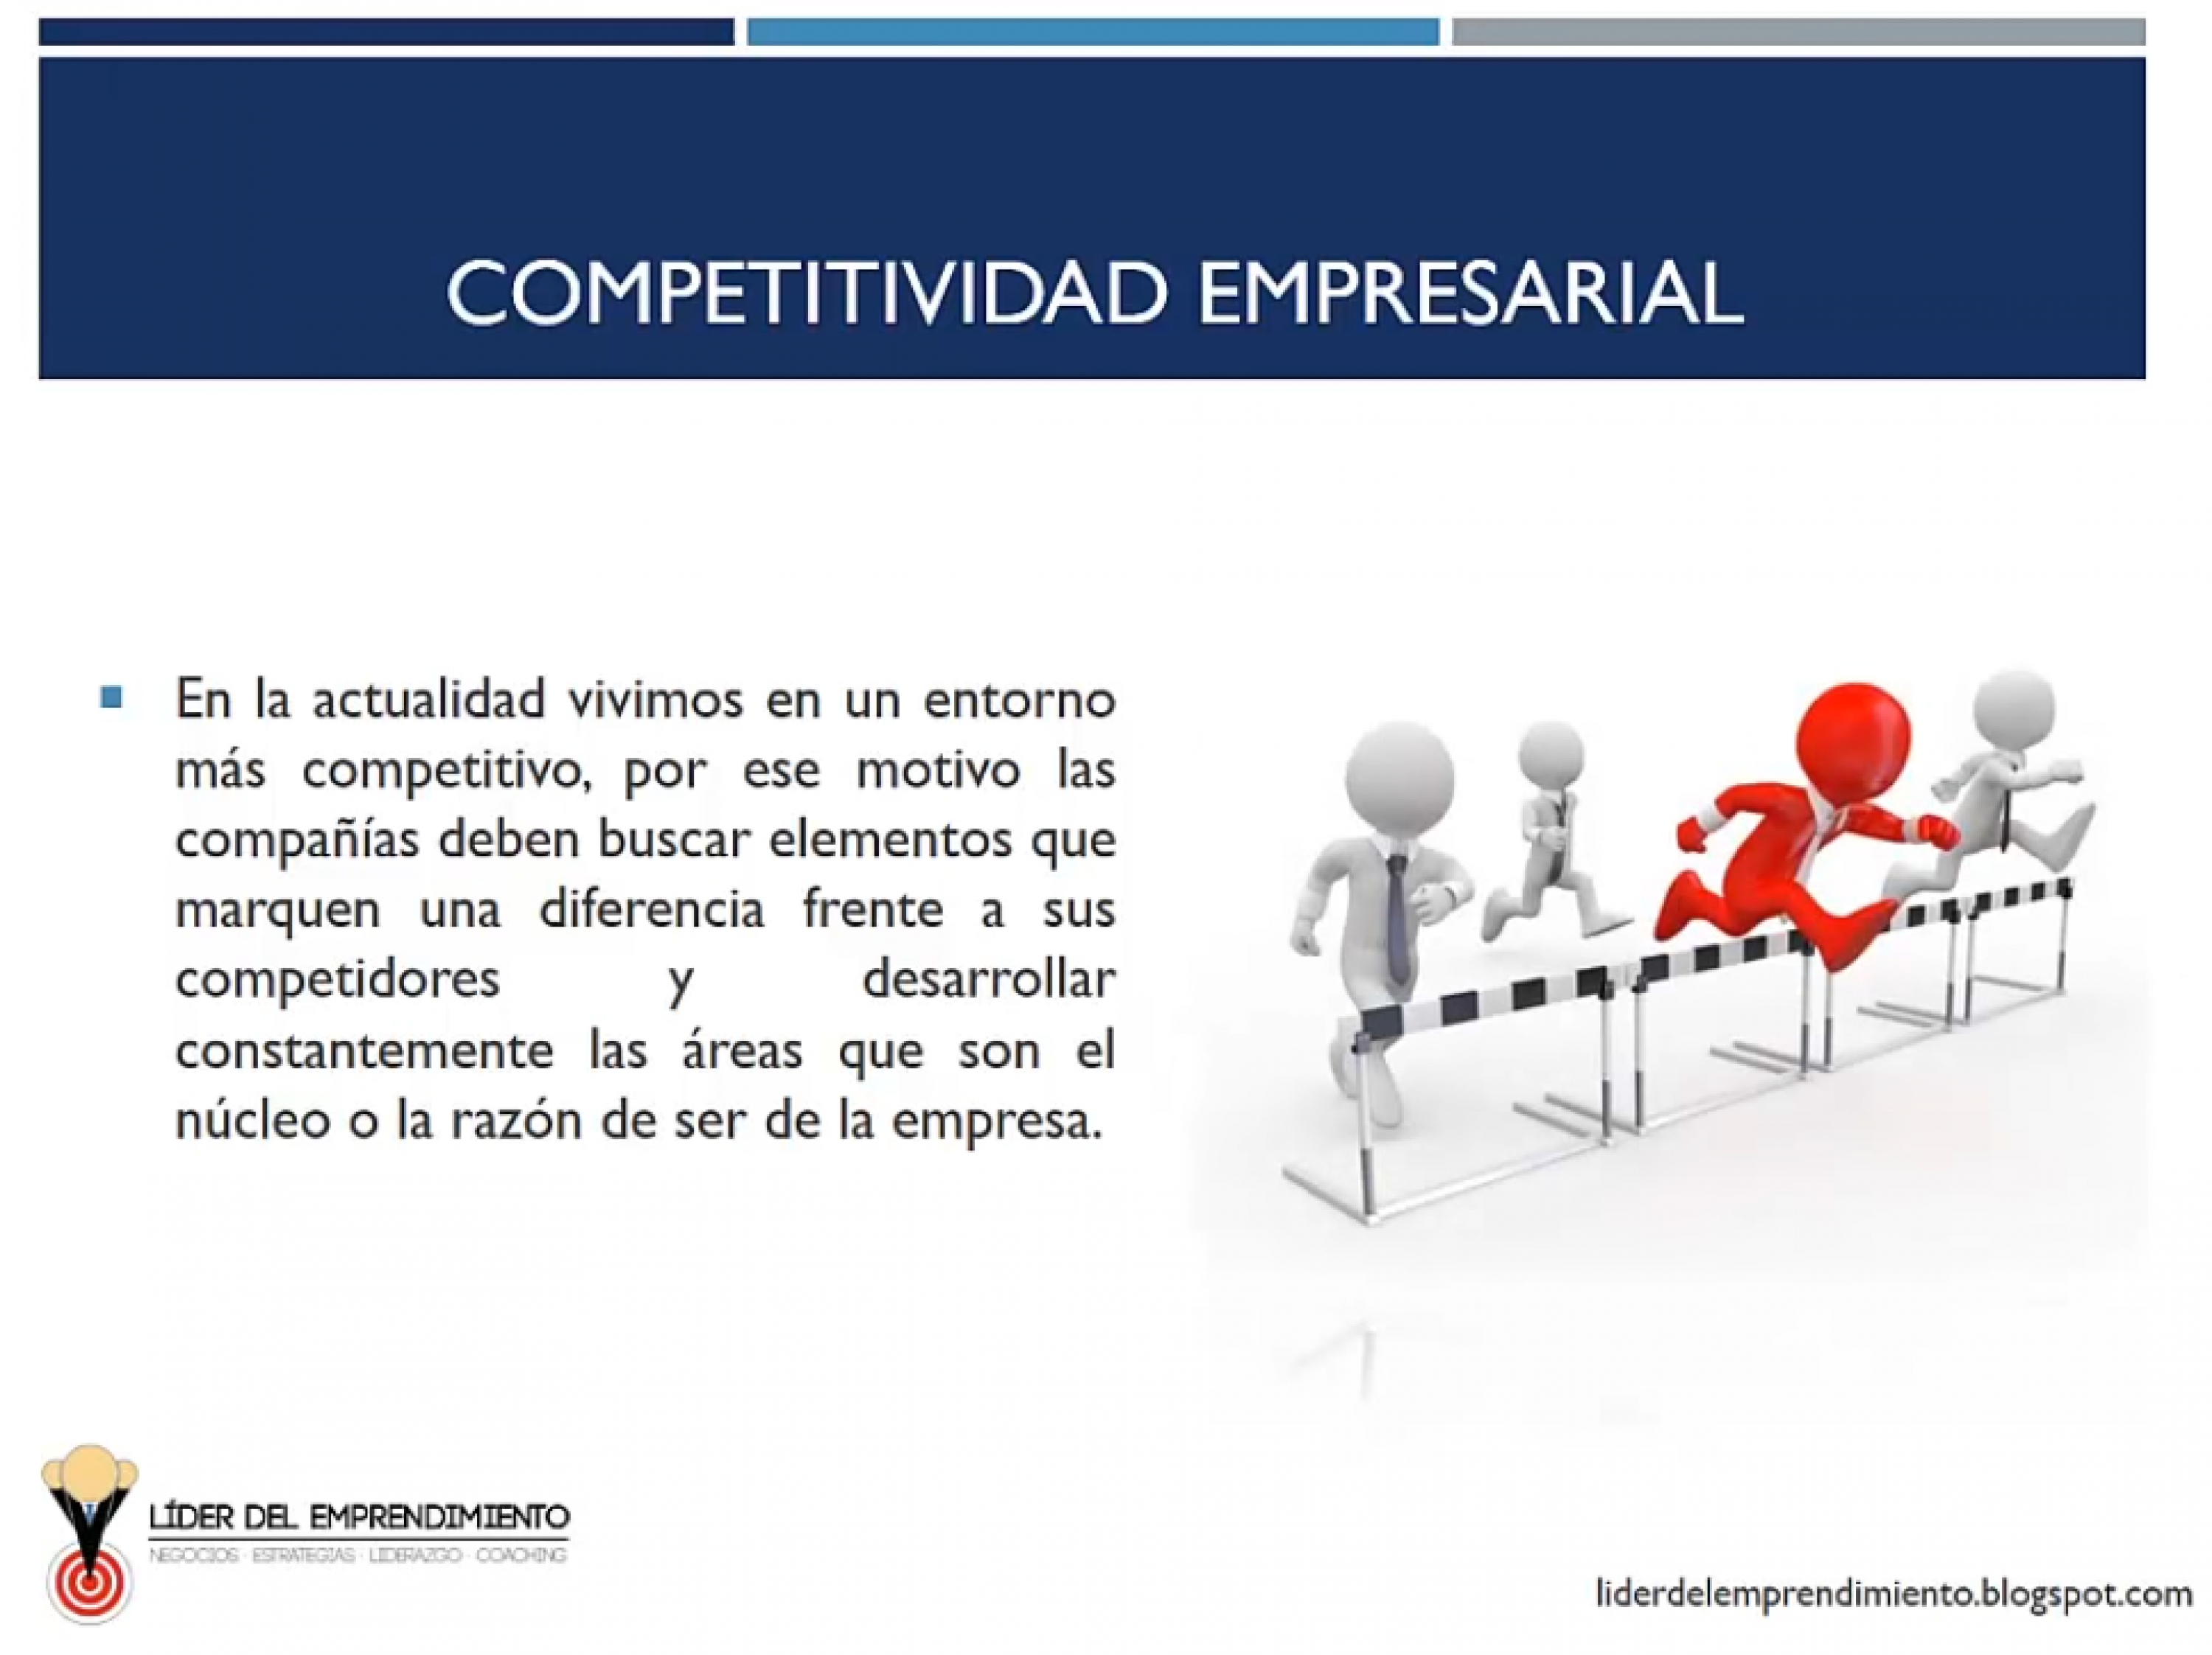 Competitividad empresarial